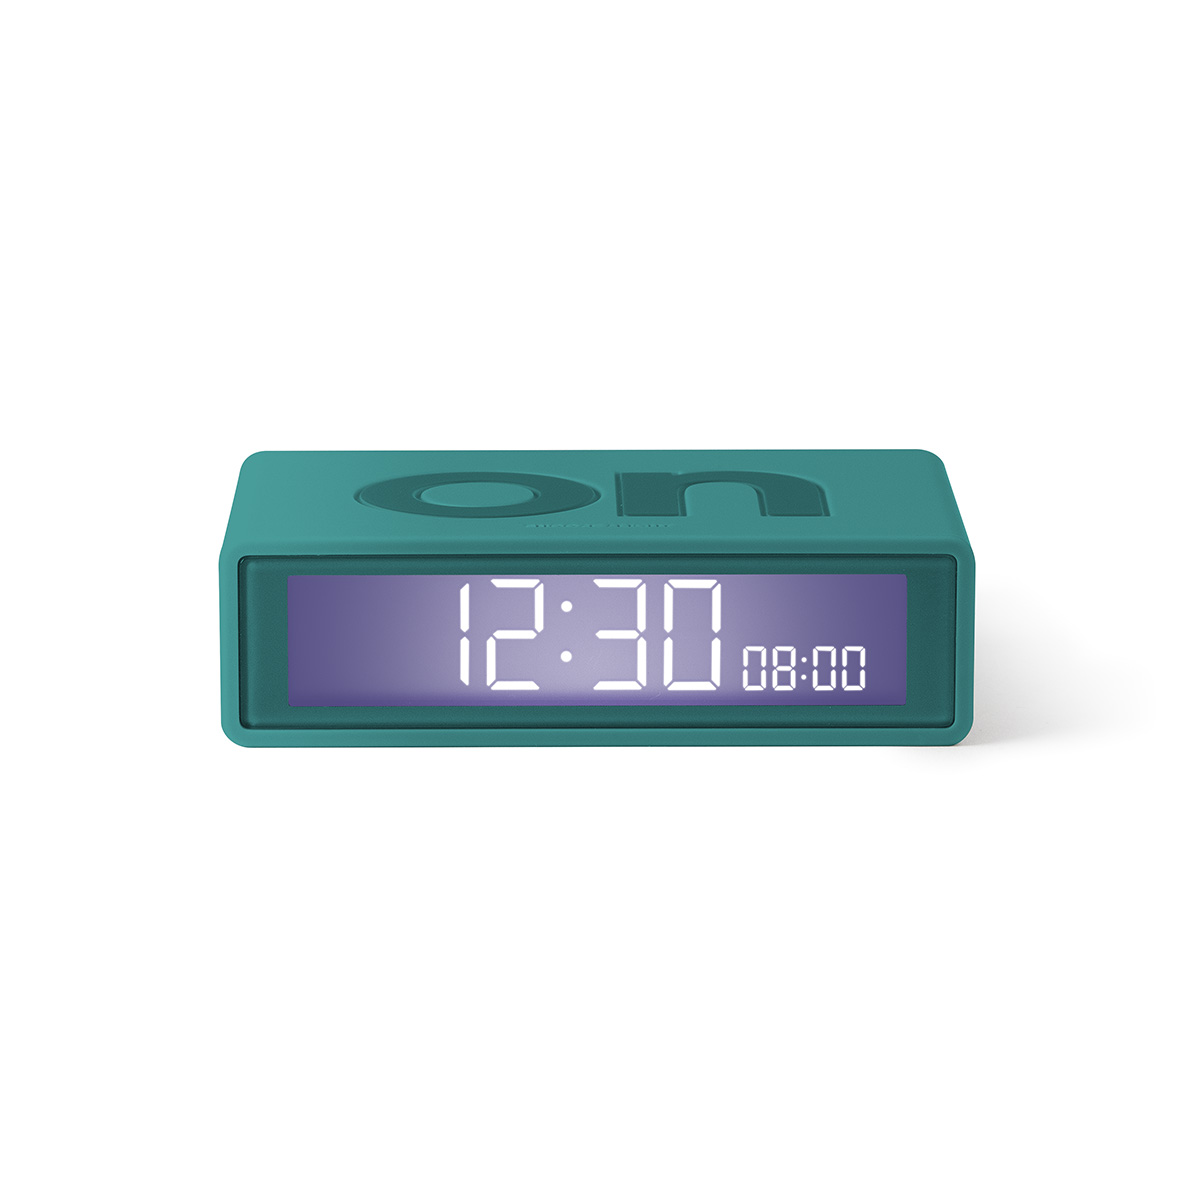 lexon flip alarm clock instructions